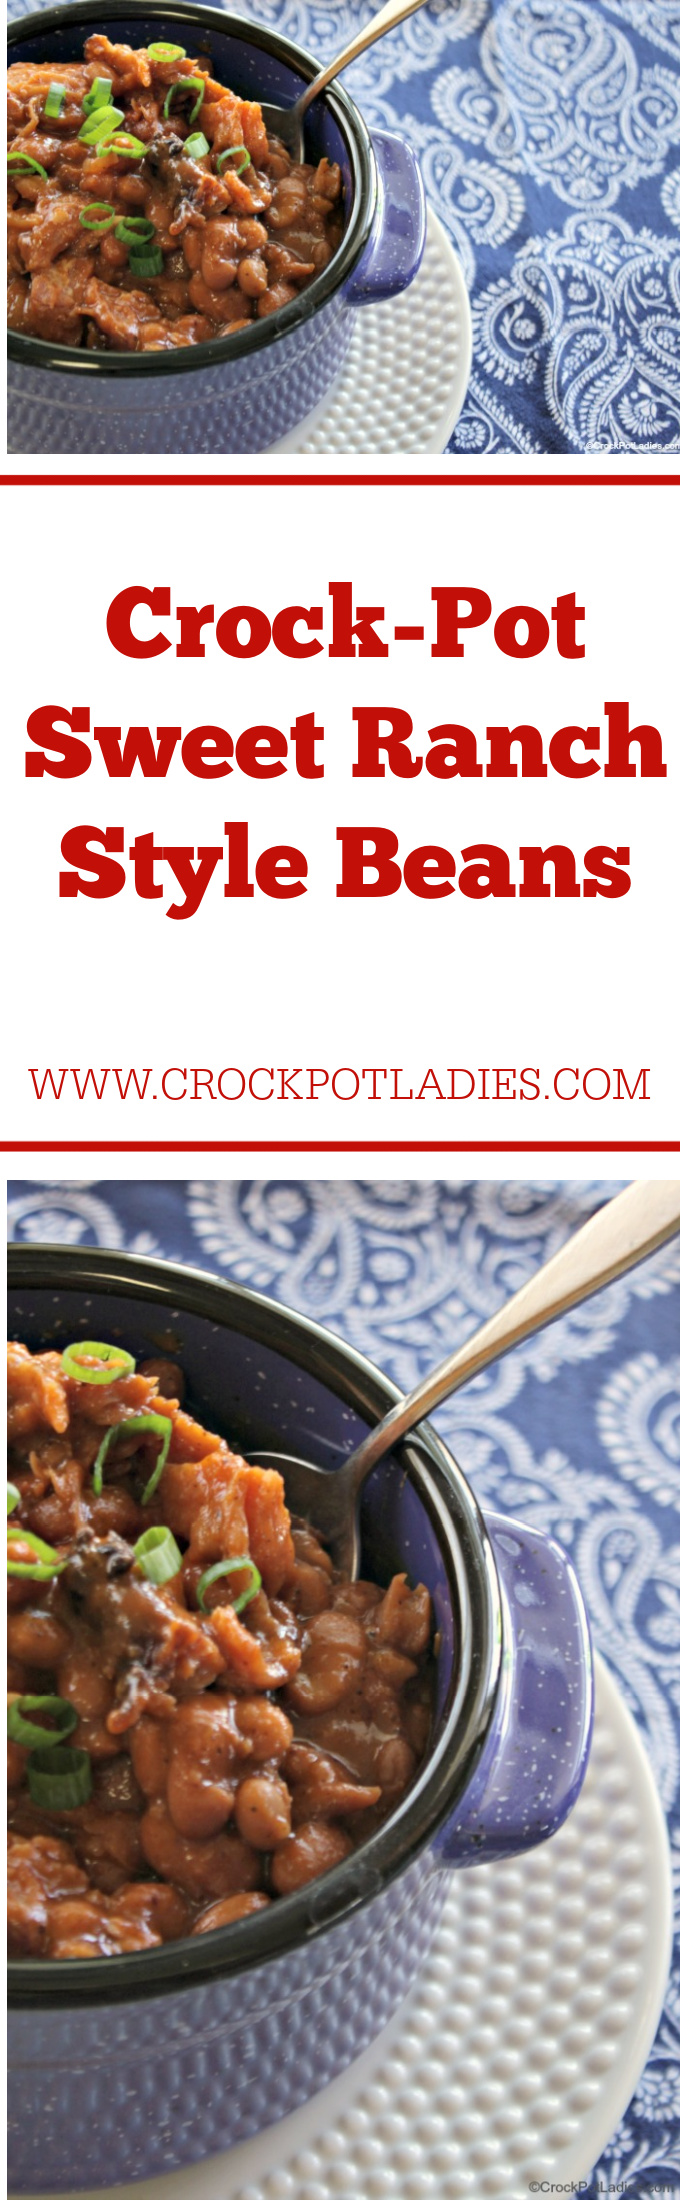 Crock-Pot Sweet Ranch Style Beans